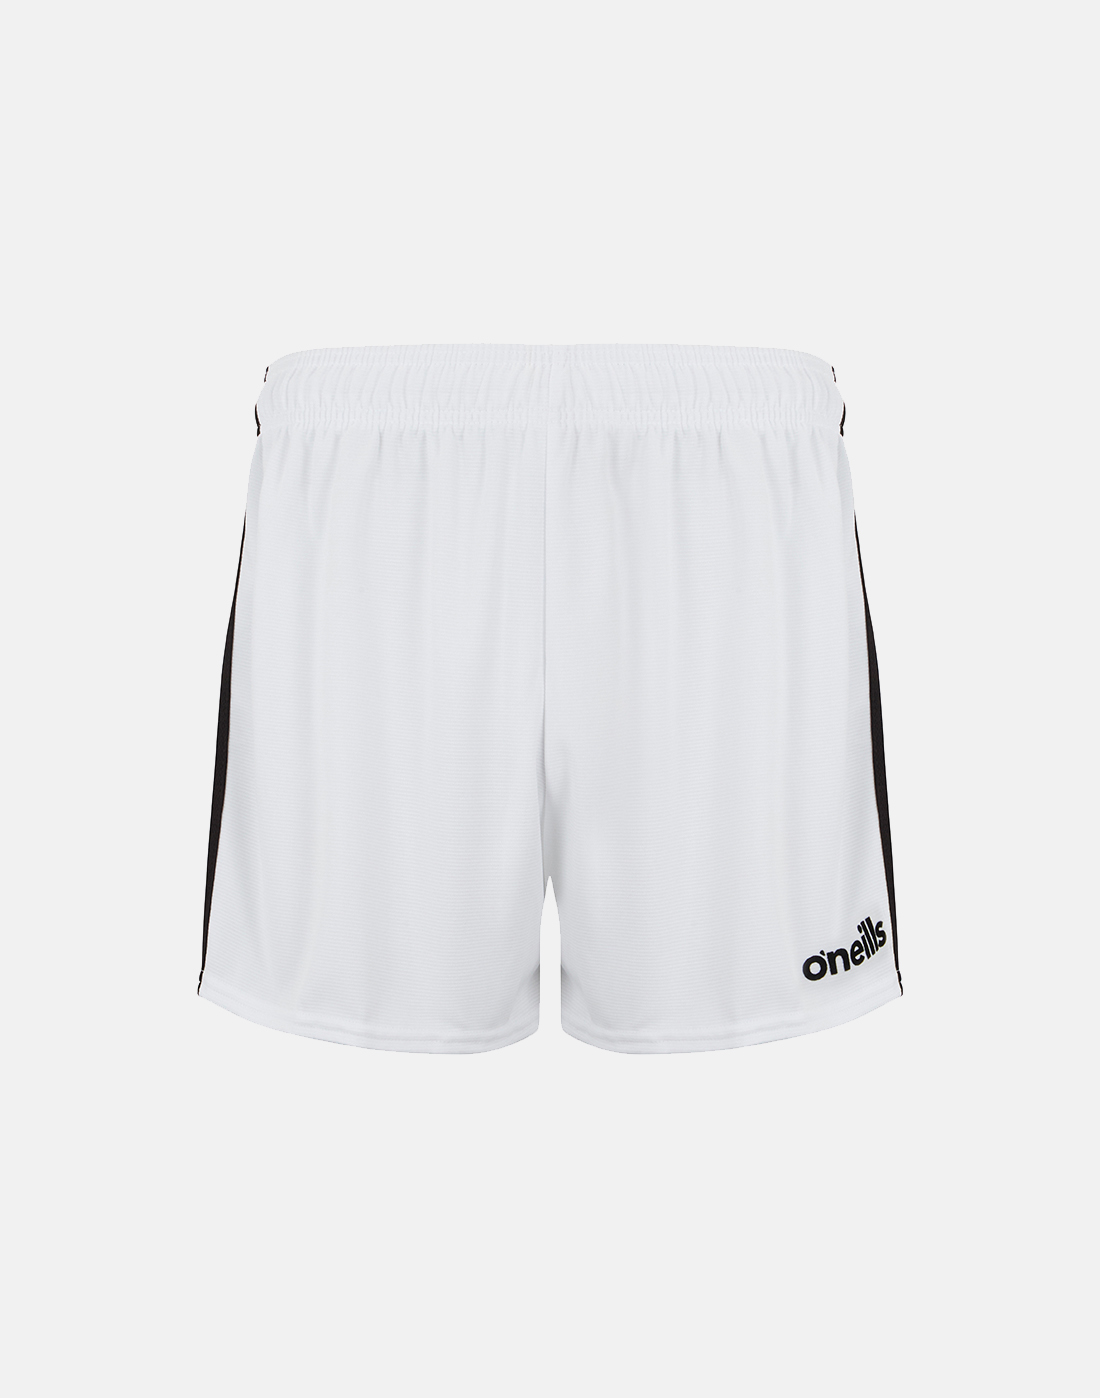 nike total 90 shorts